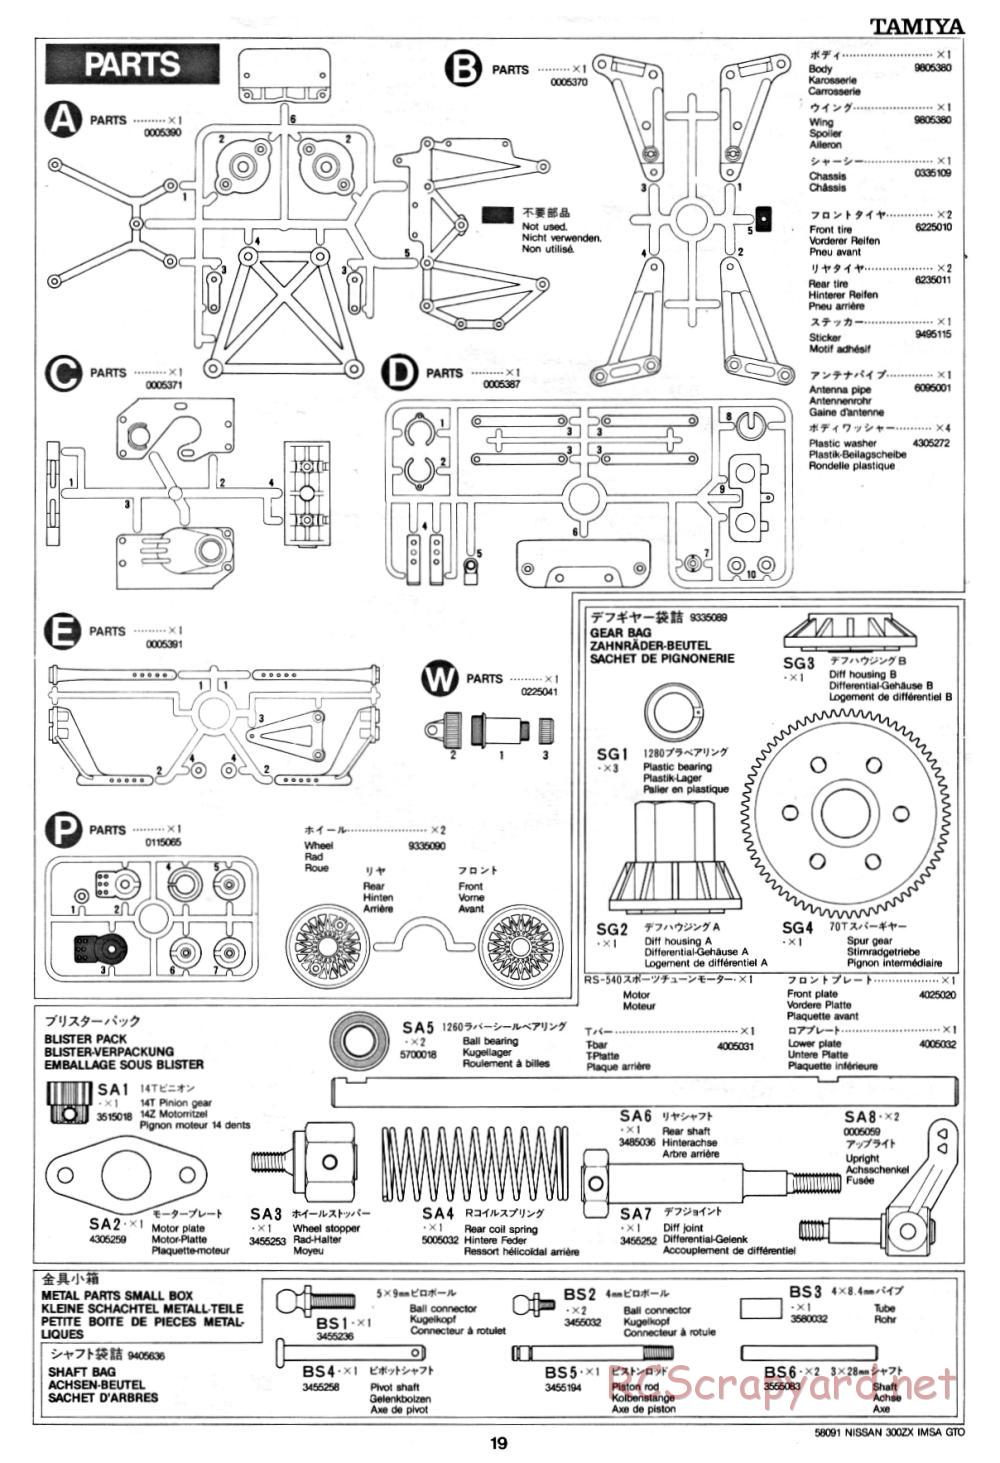 Tamiya - Nissan 300ZX IMSA GTO - 58091 - Manual - Page 19